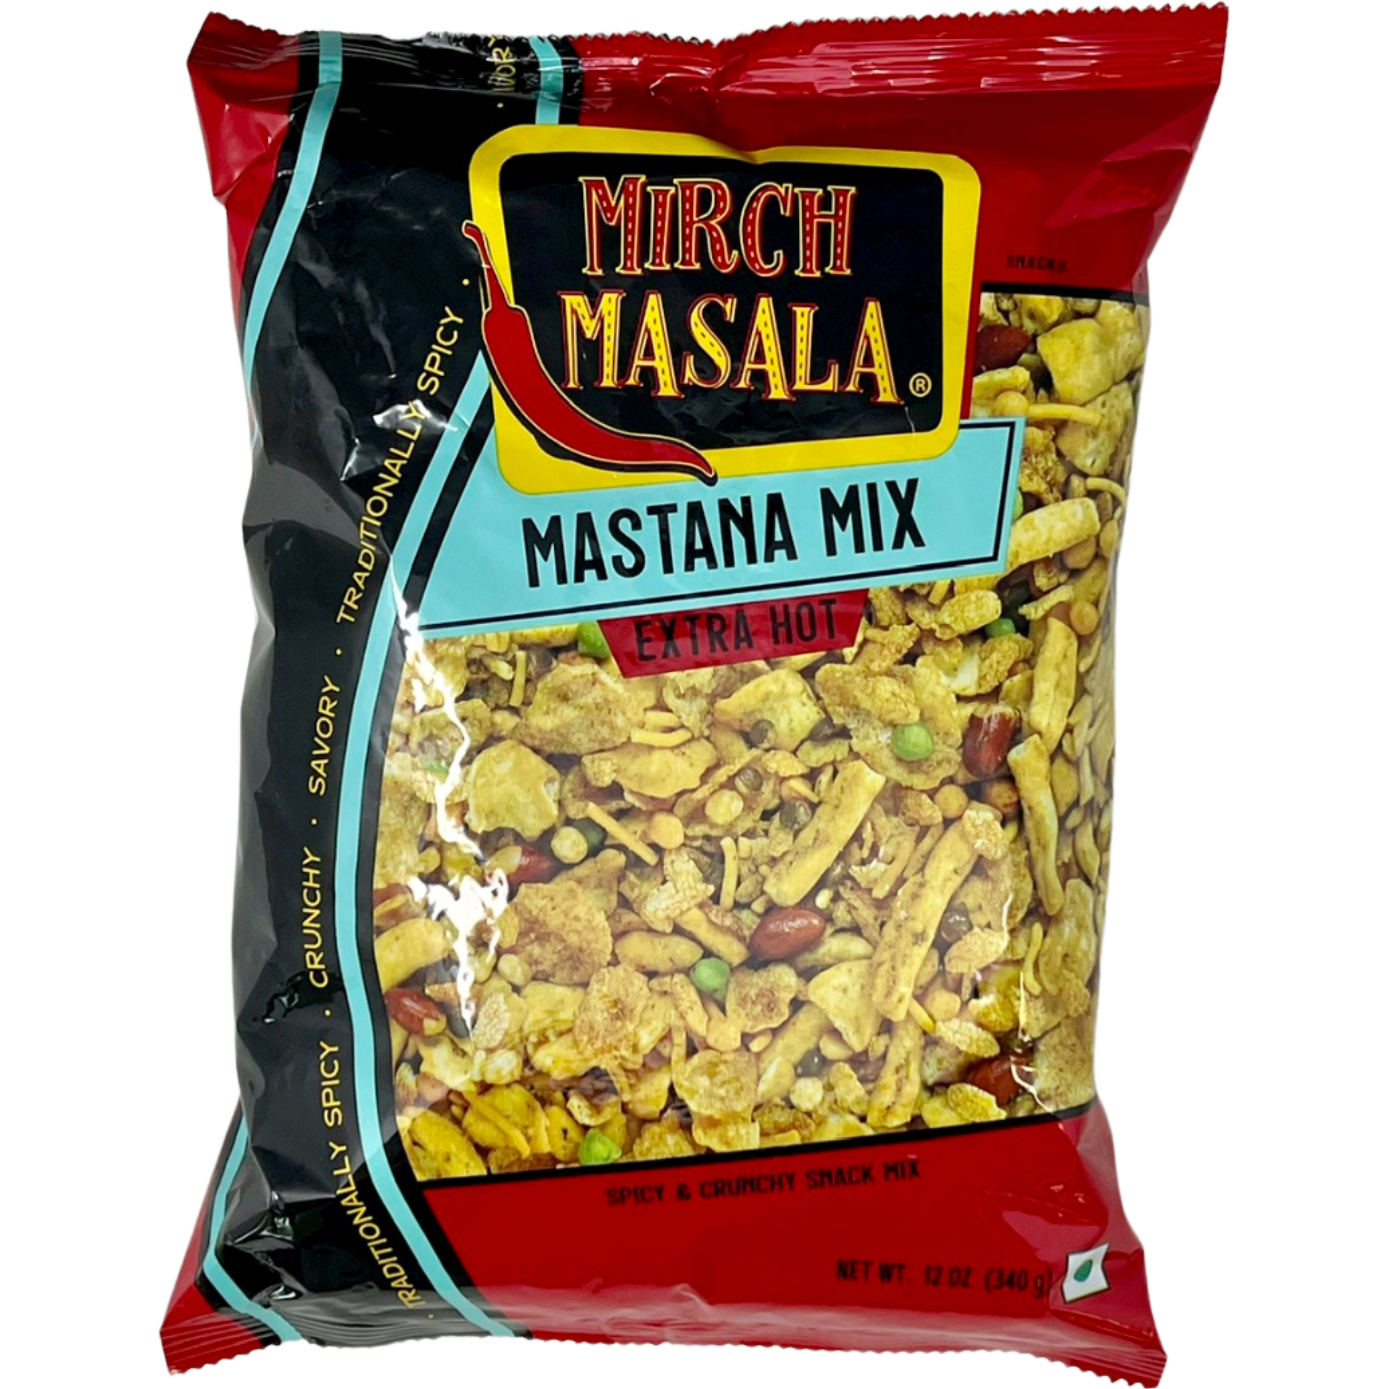 Pack of 4 - Mirch Masala Mastana Mix Extra Hot - 12 Oz (340 Gm)